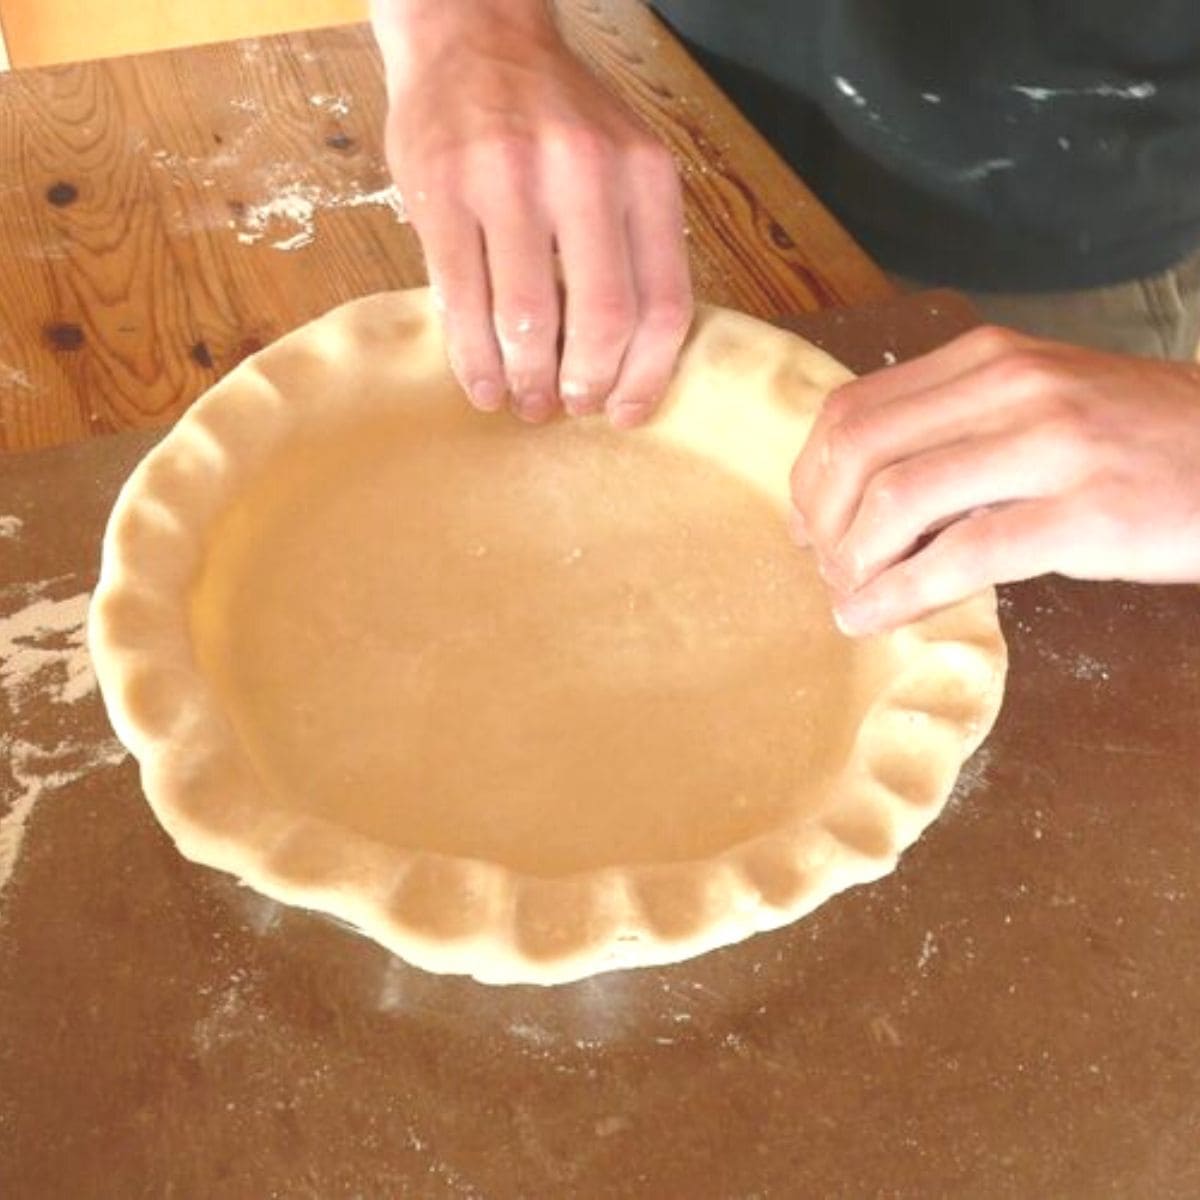 hands crimping a pie crust.